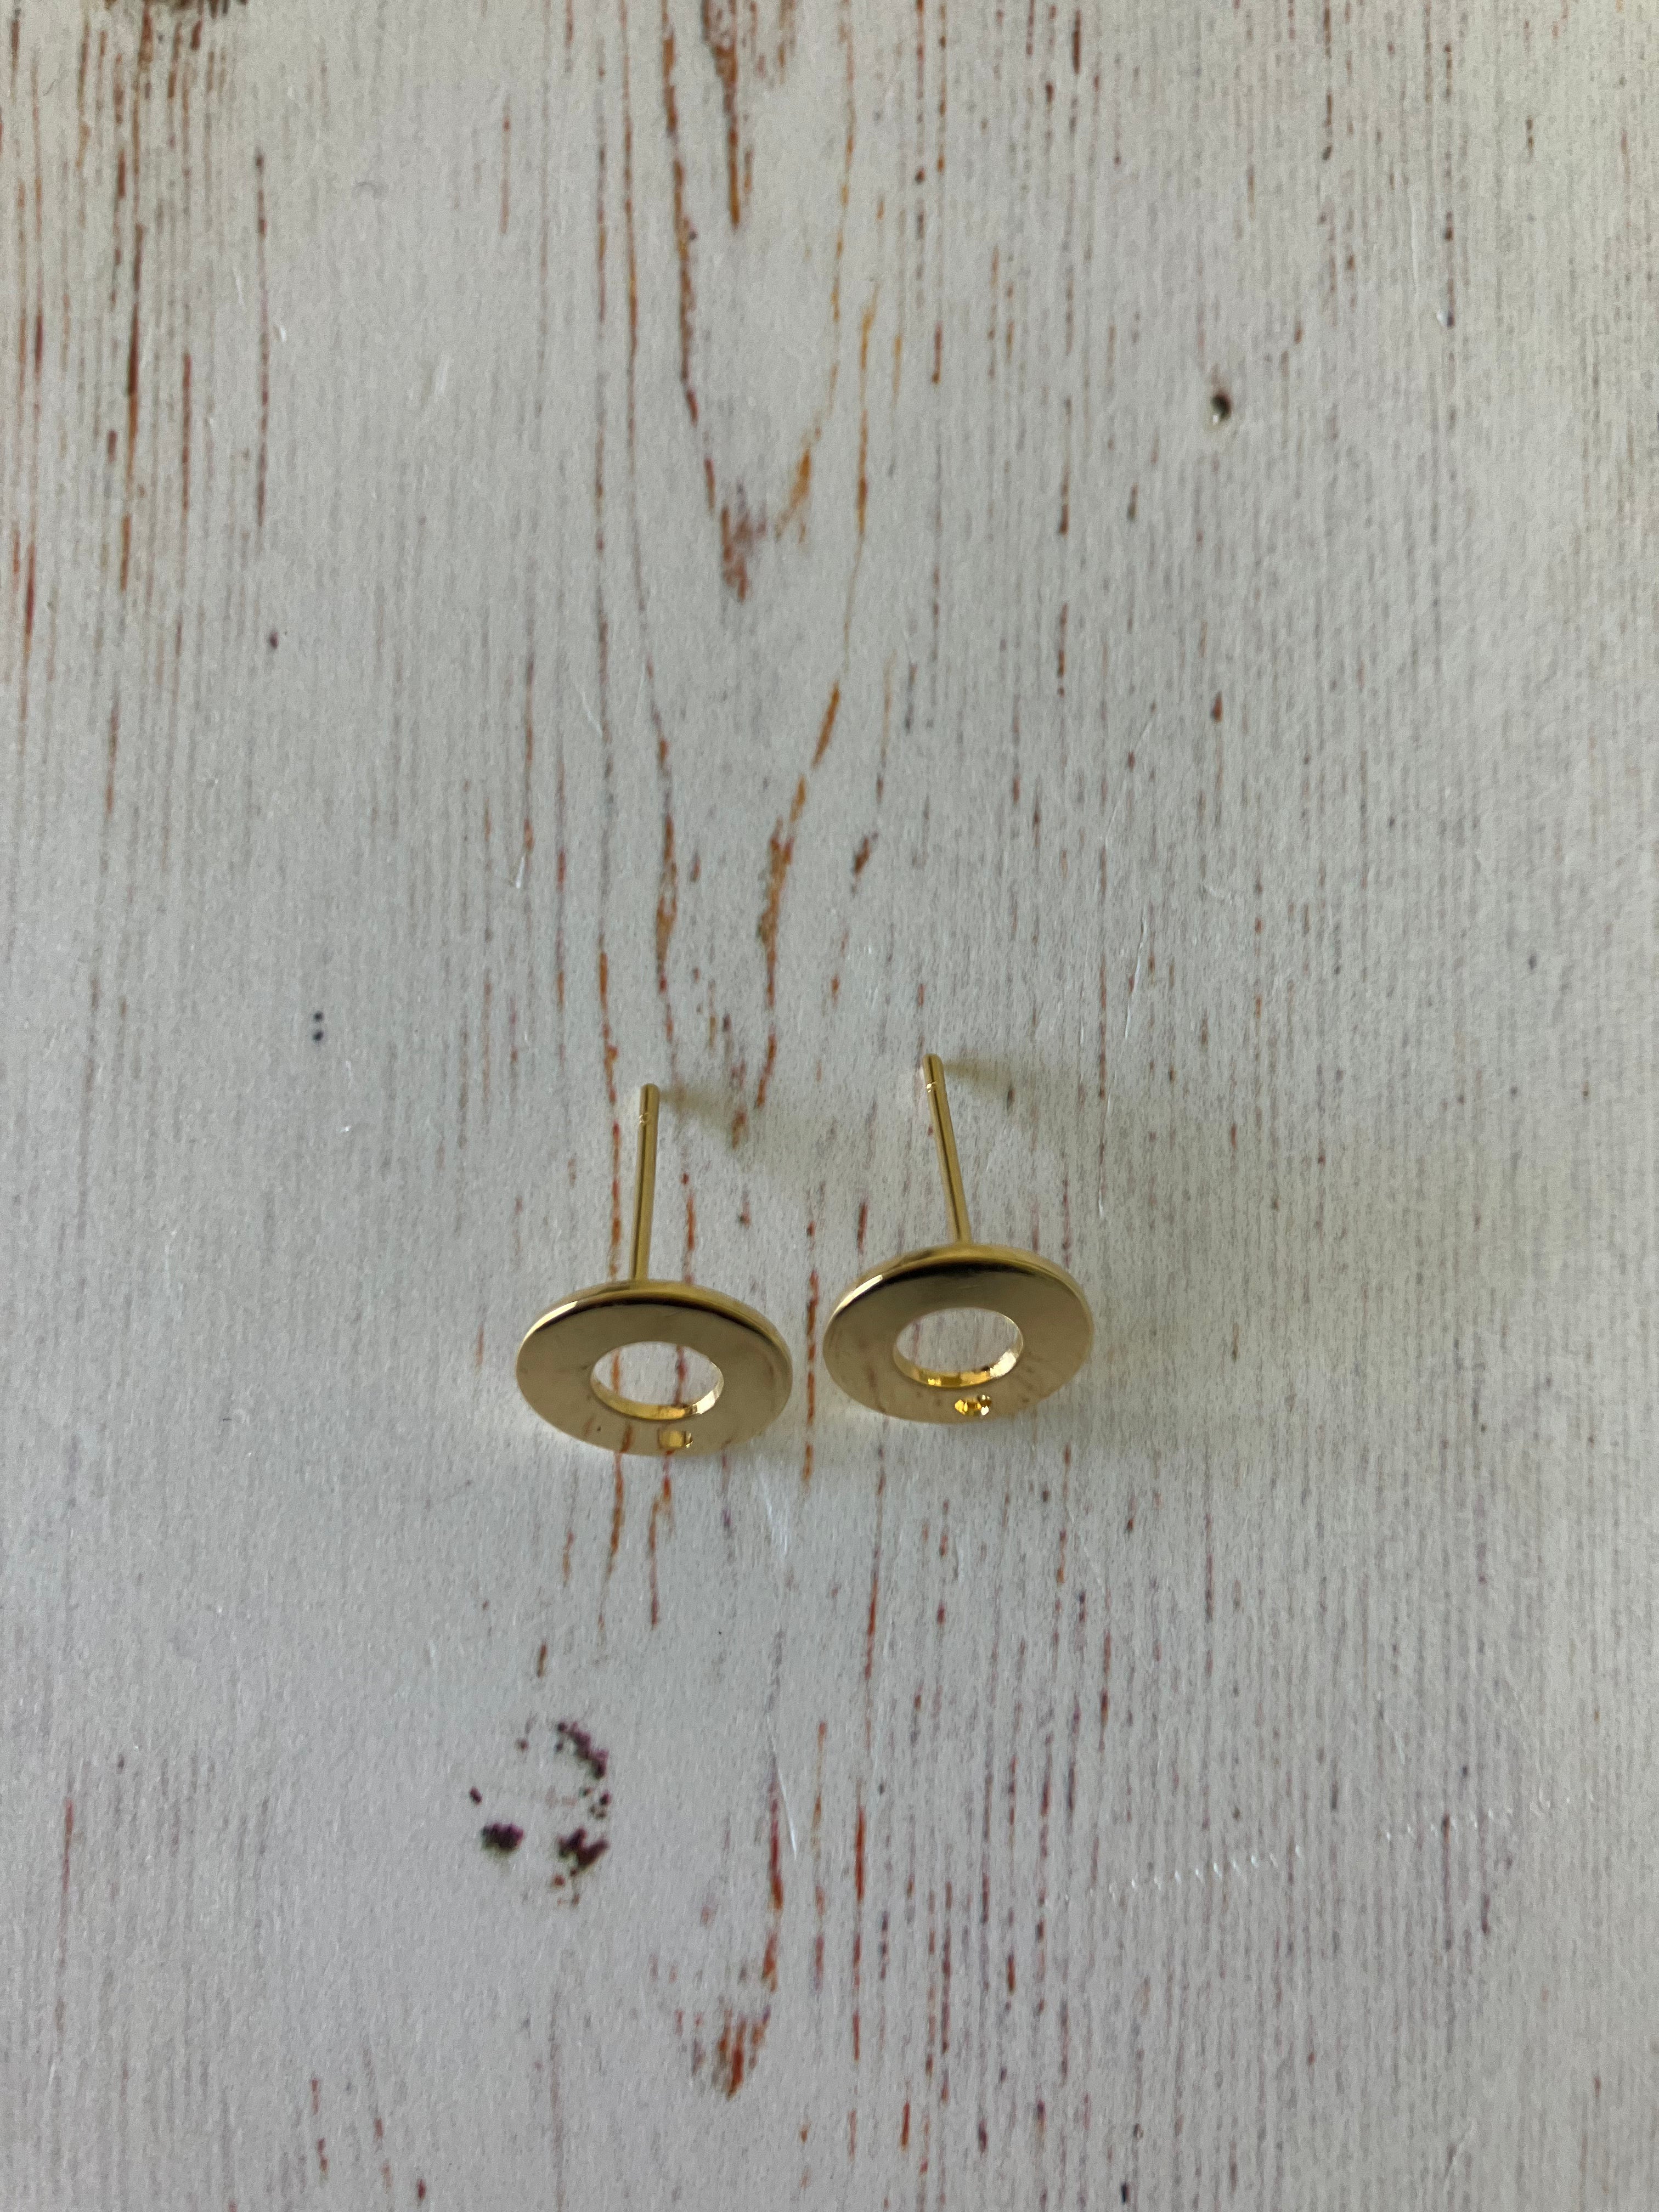 304 Stainless Steel Stud Earring Findings, Donut, Golden - (SOLD PAIR)